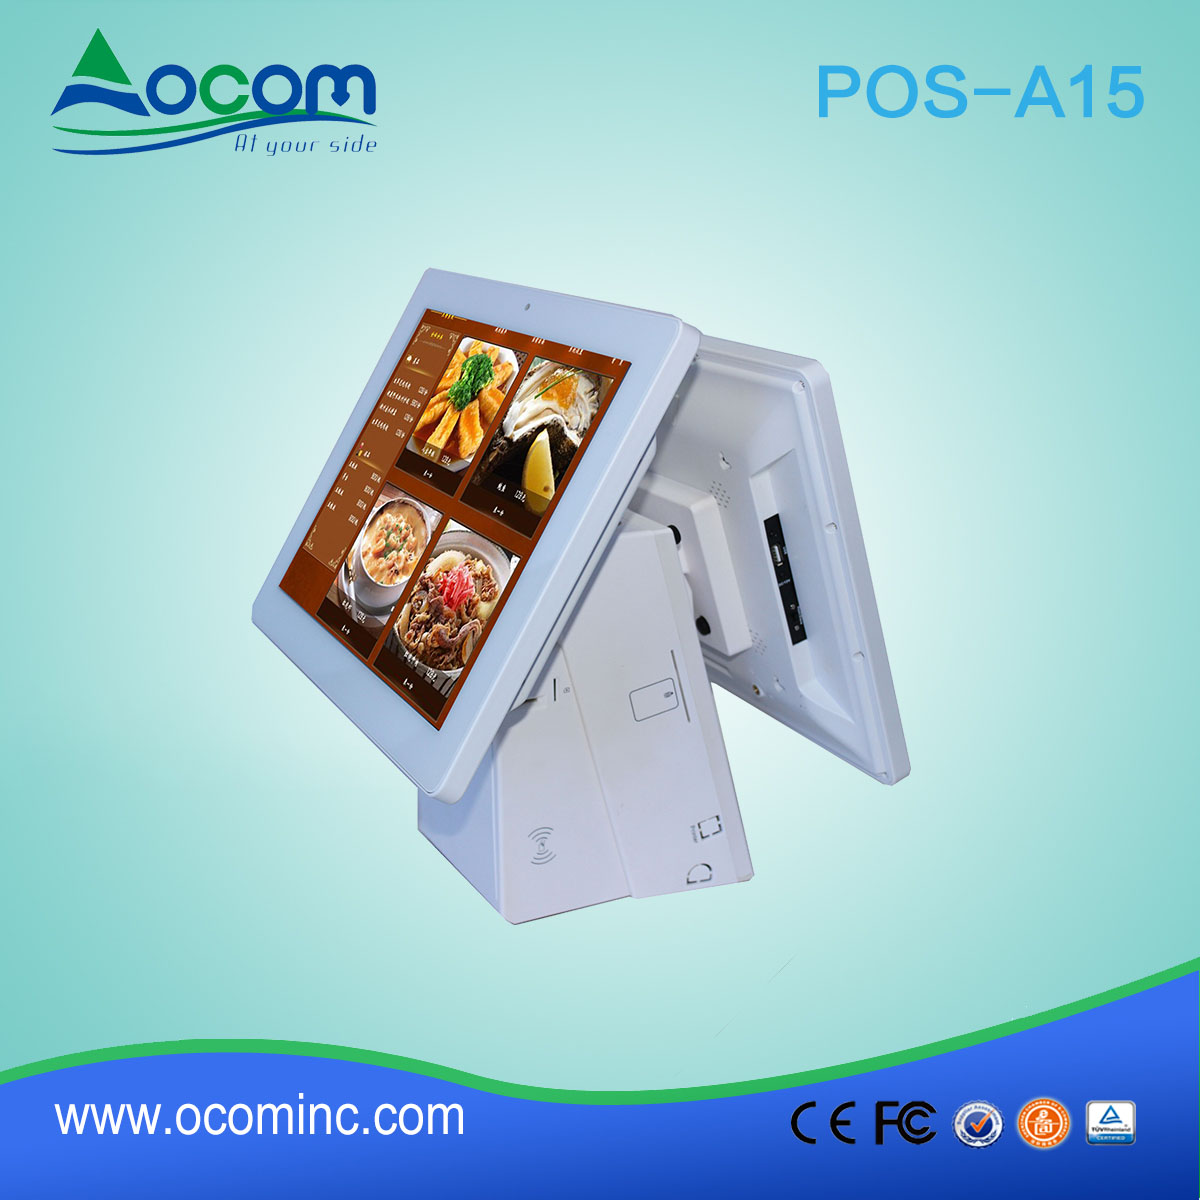 POS-A15-W billige 15-Zoll-Touchscreen alle in einem POS-PC